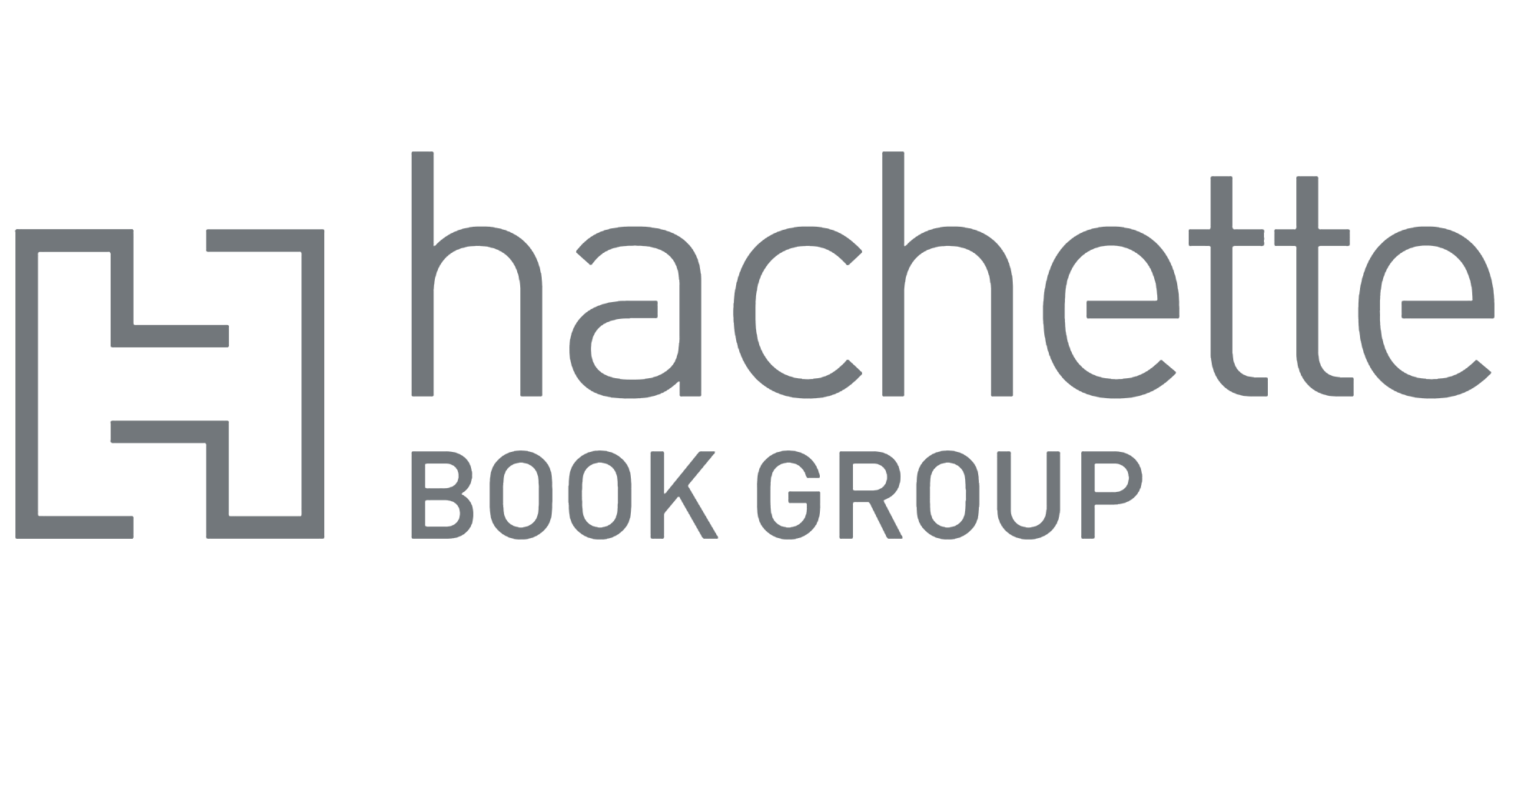 Hachette UK Publishers Association